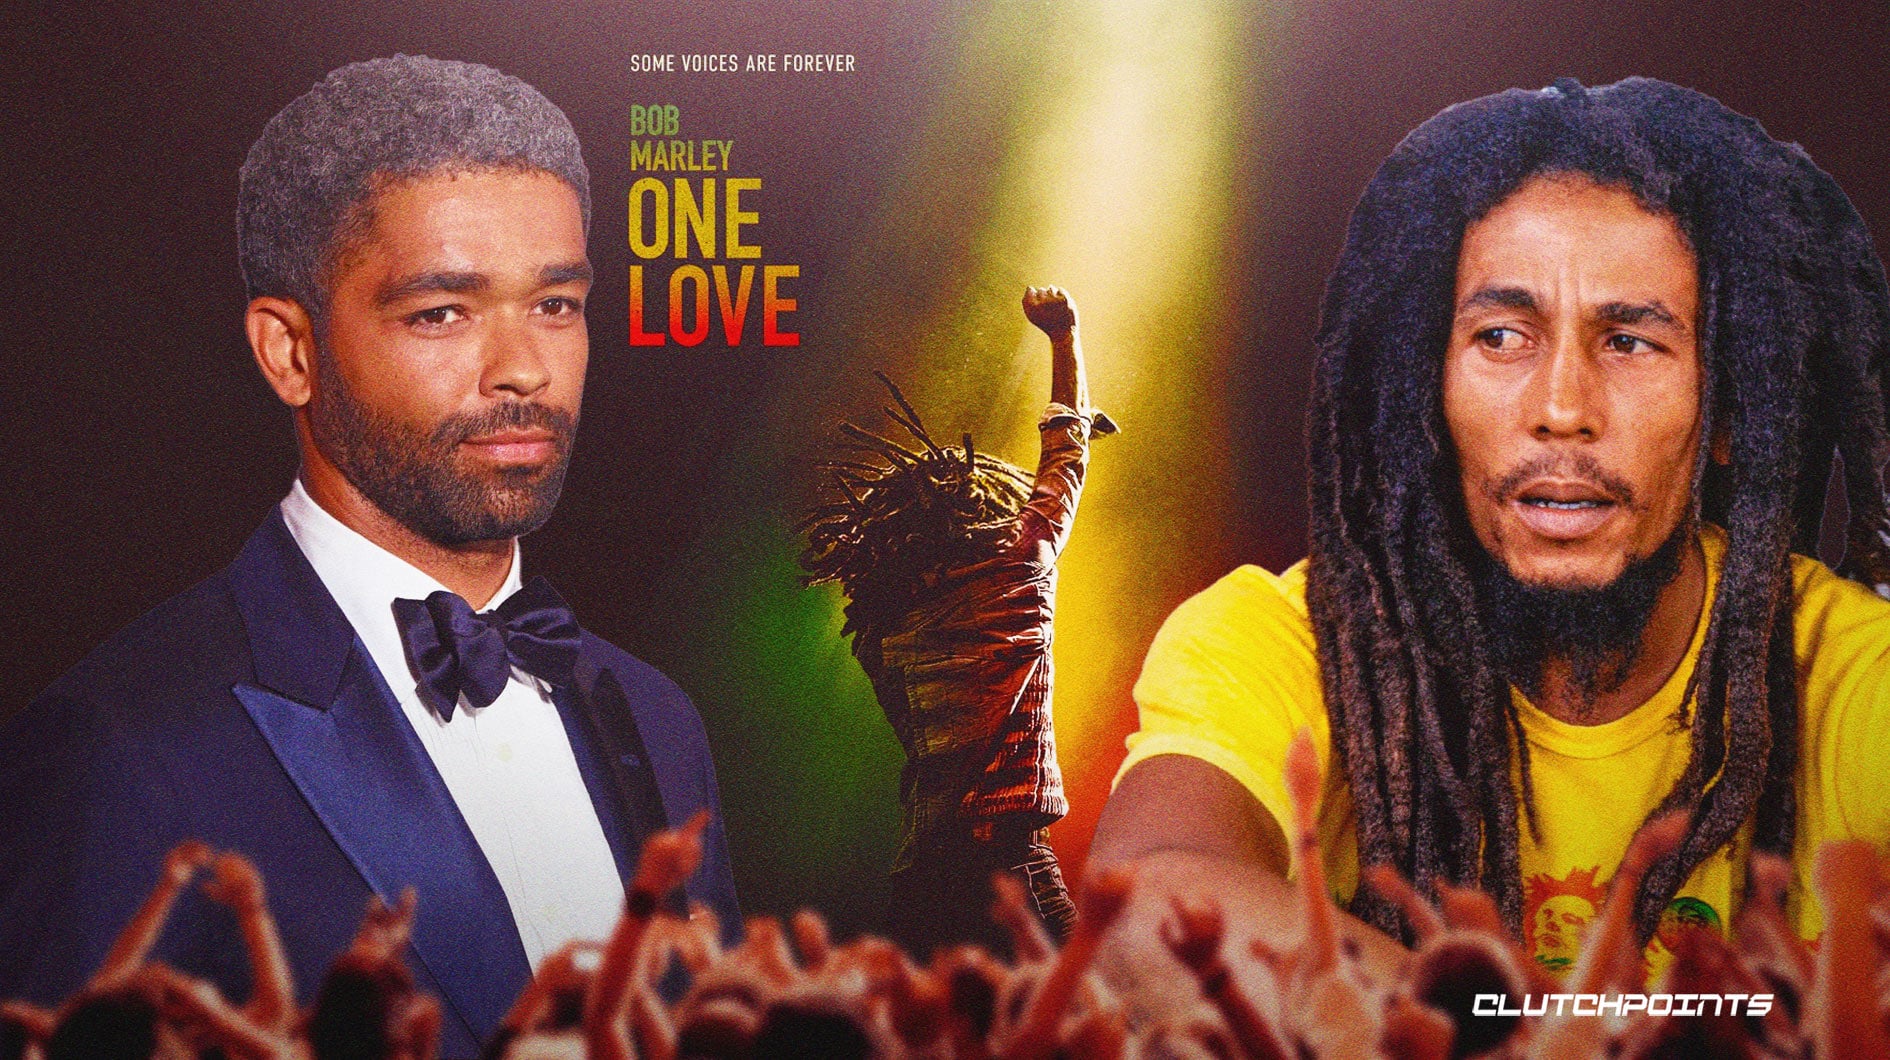 Kingsley Ben-Adir is Bob Marley in first One Love trailer